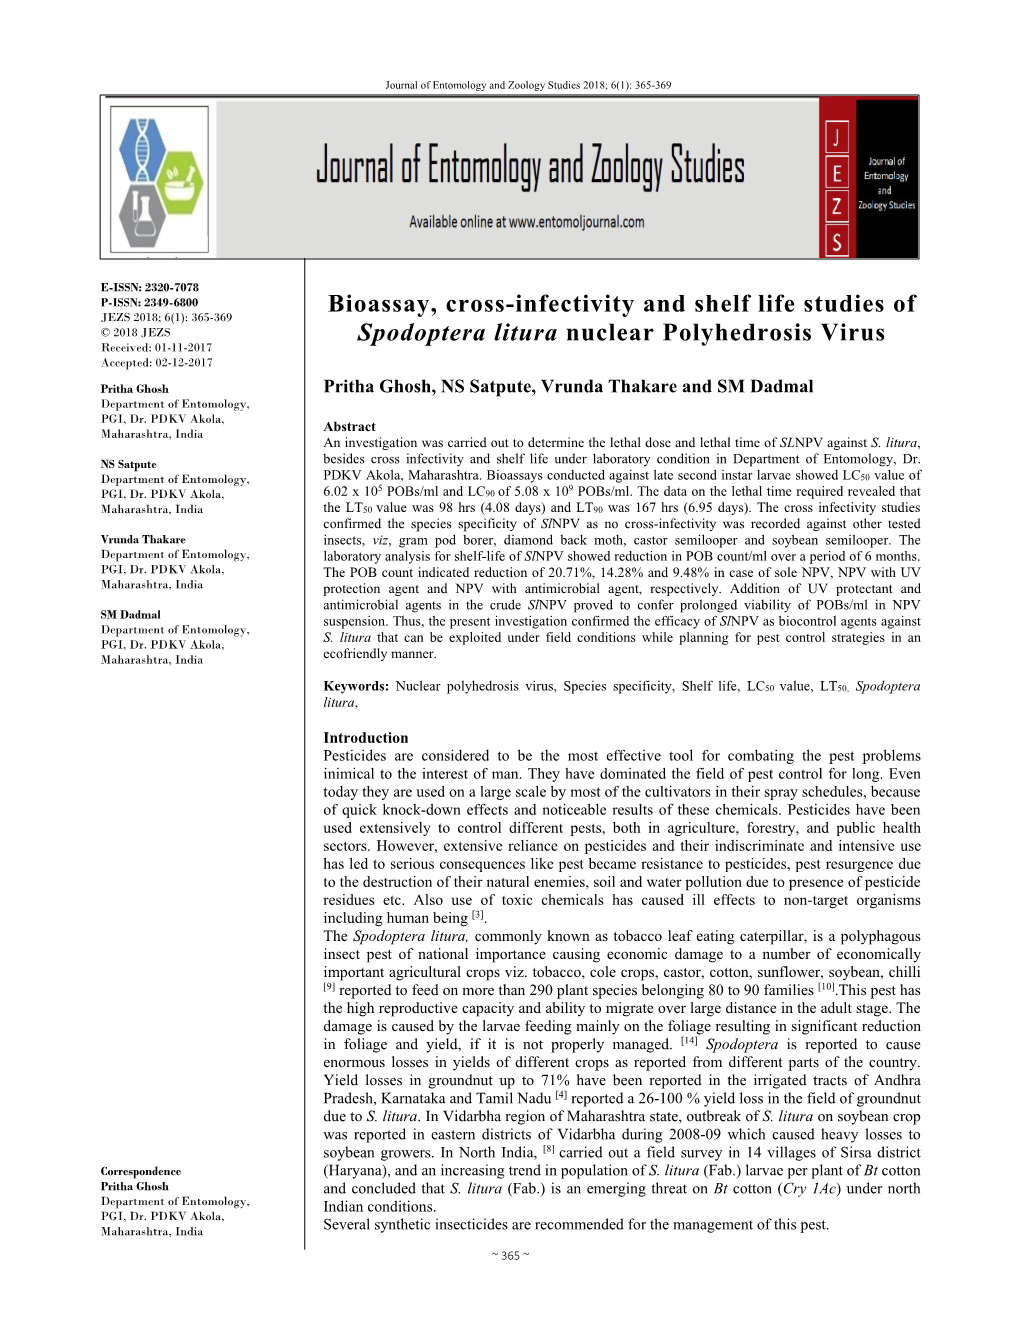 Bioassay, Cross-Infectivity and Shelf Life Studies of Spodoptera Litura